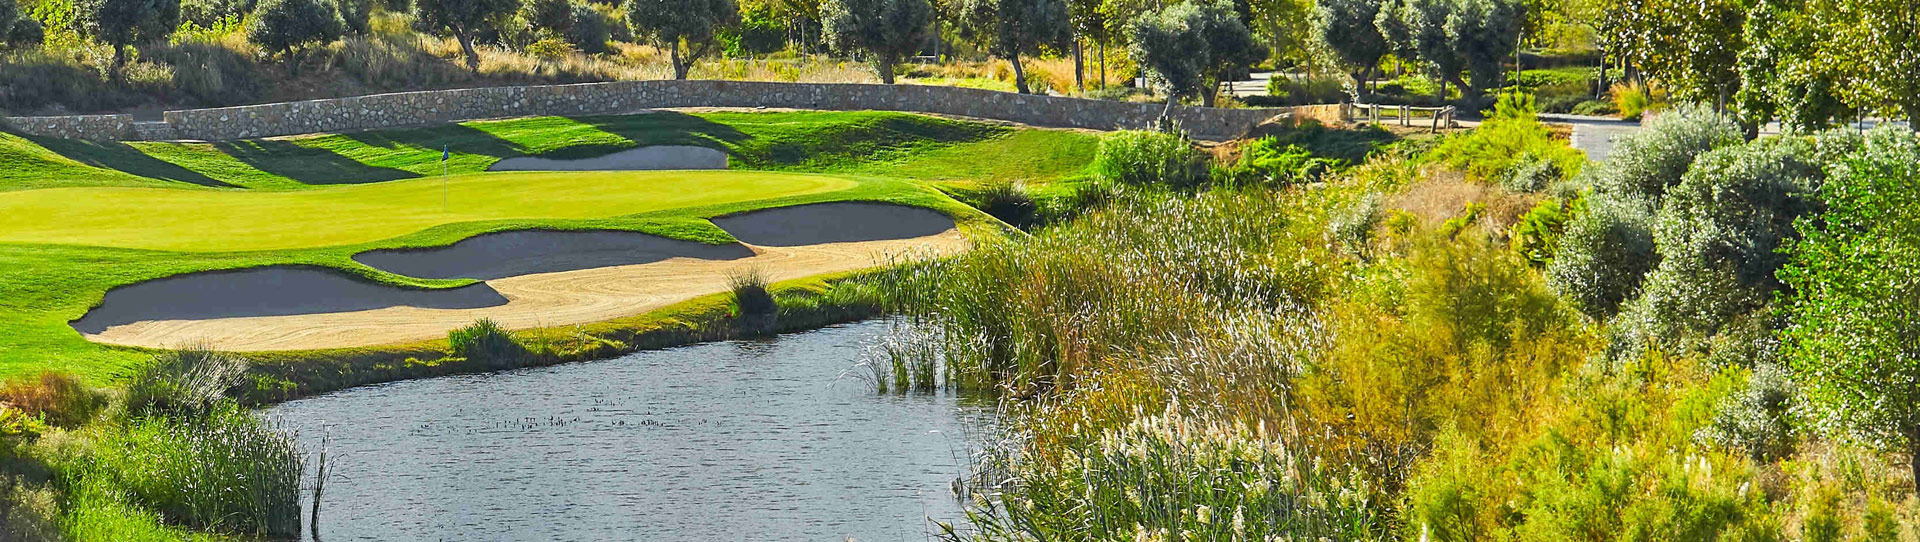 Spain golf courses - Infinitum Lakes (Ex Lumine) - Photo 2